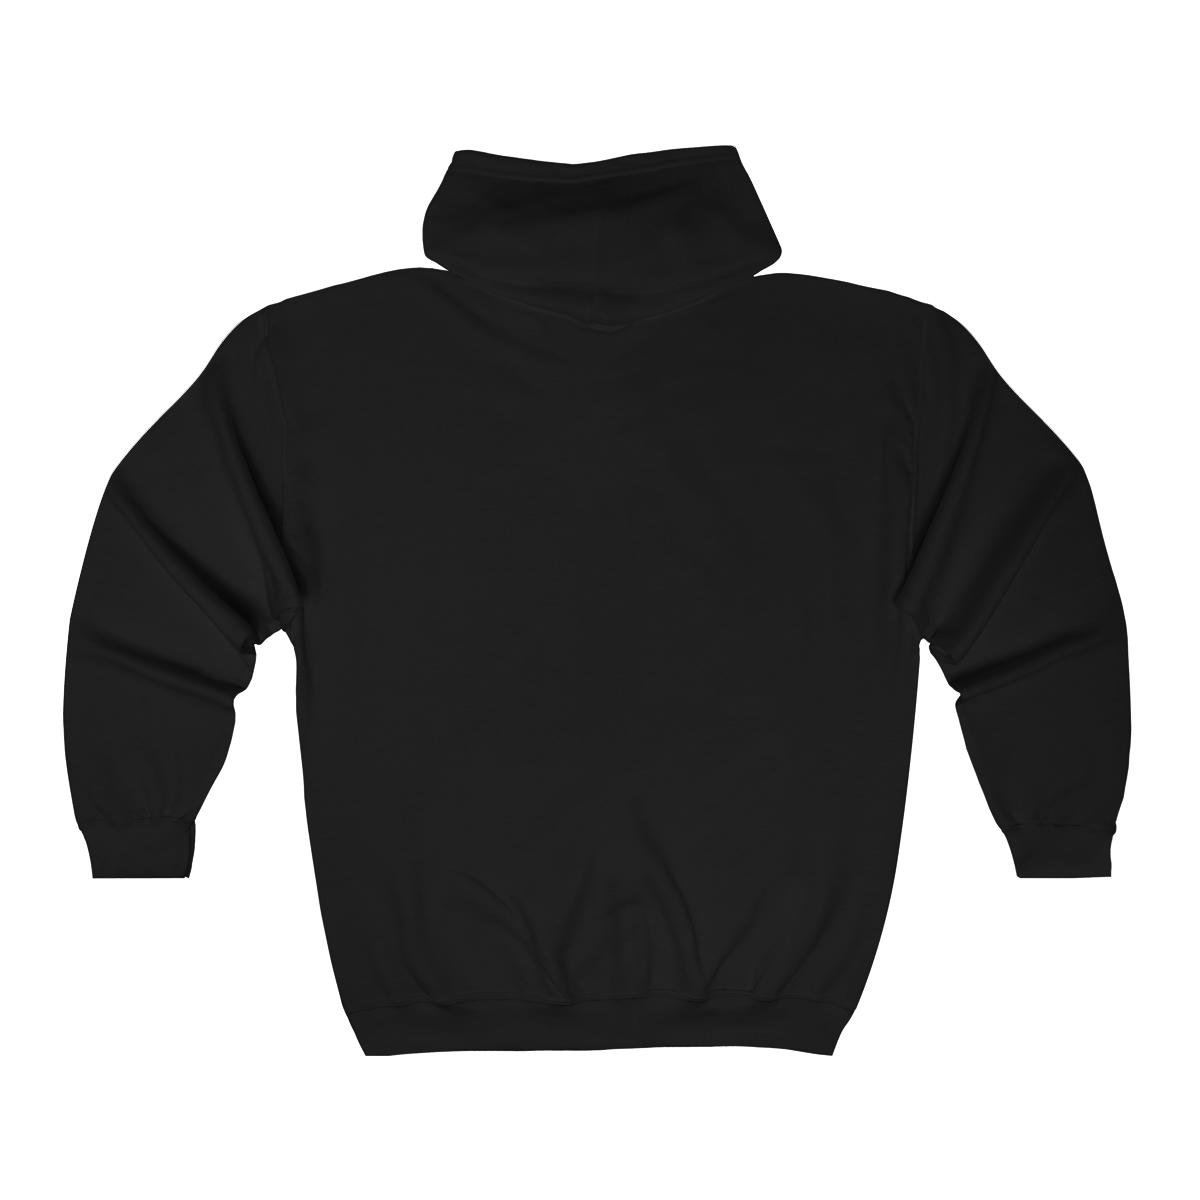 One Bad Pig – Smash Cover Full Zip Hooded Sweatshirt